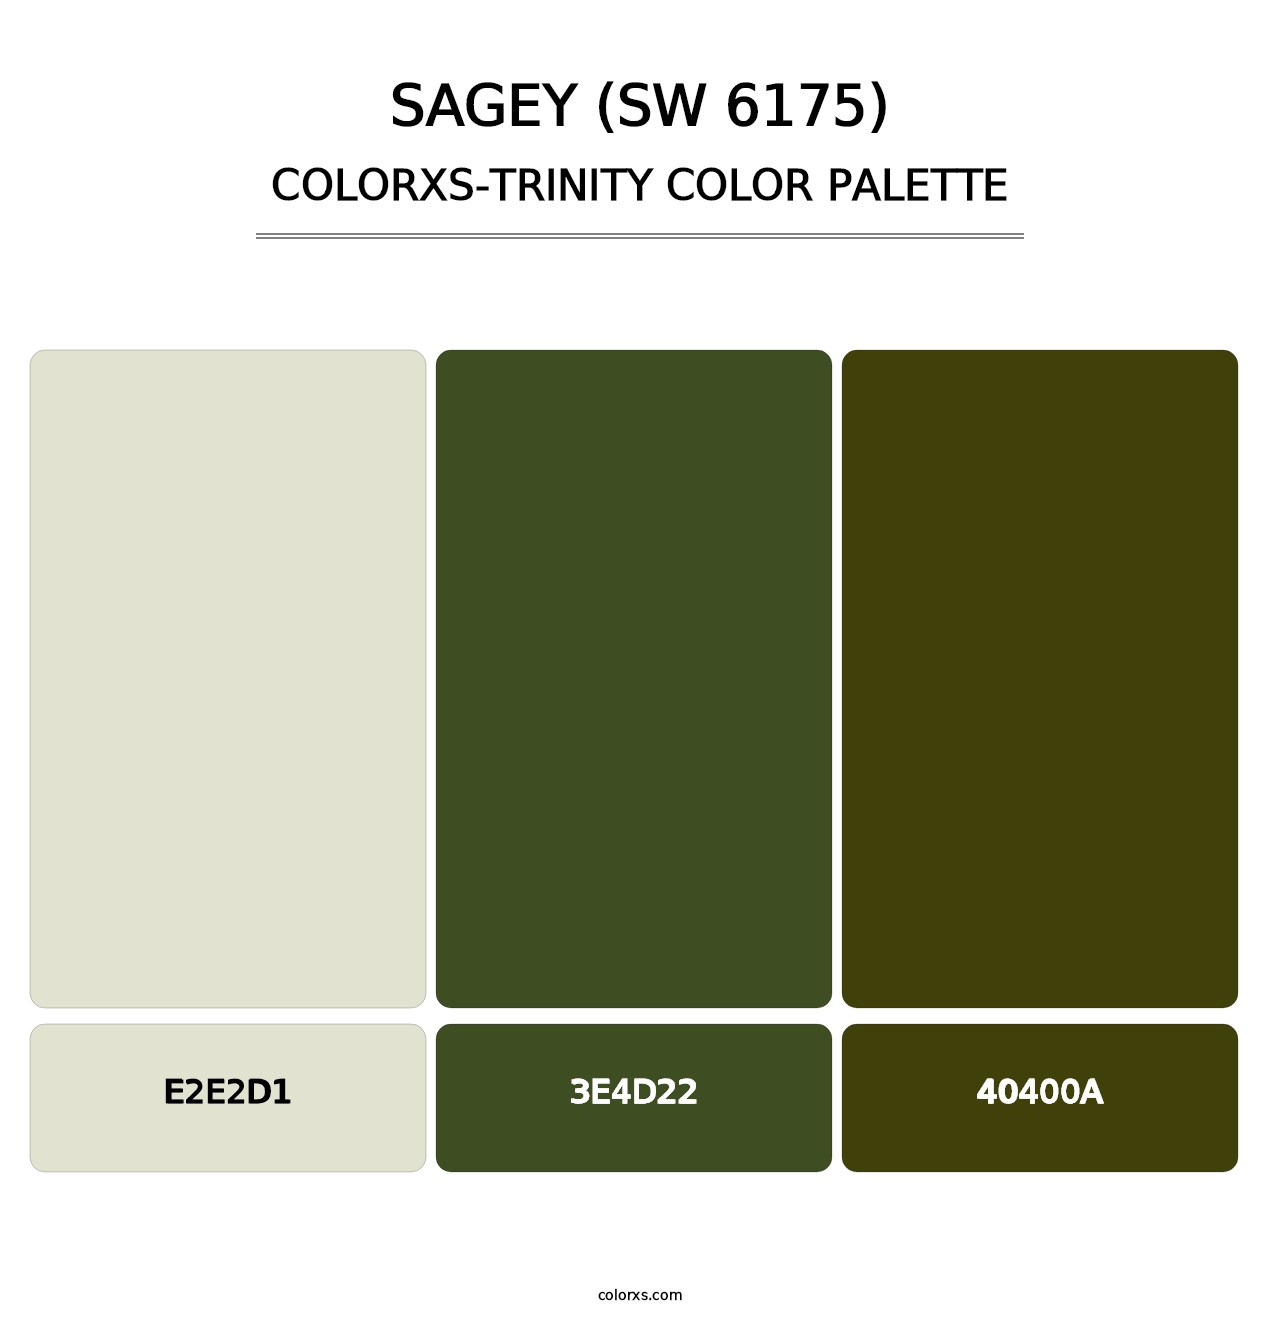 Sagey (SW 6175) - Colorxs Trinity Palette